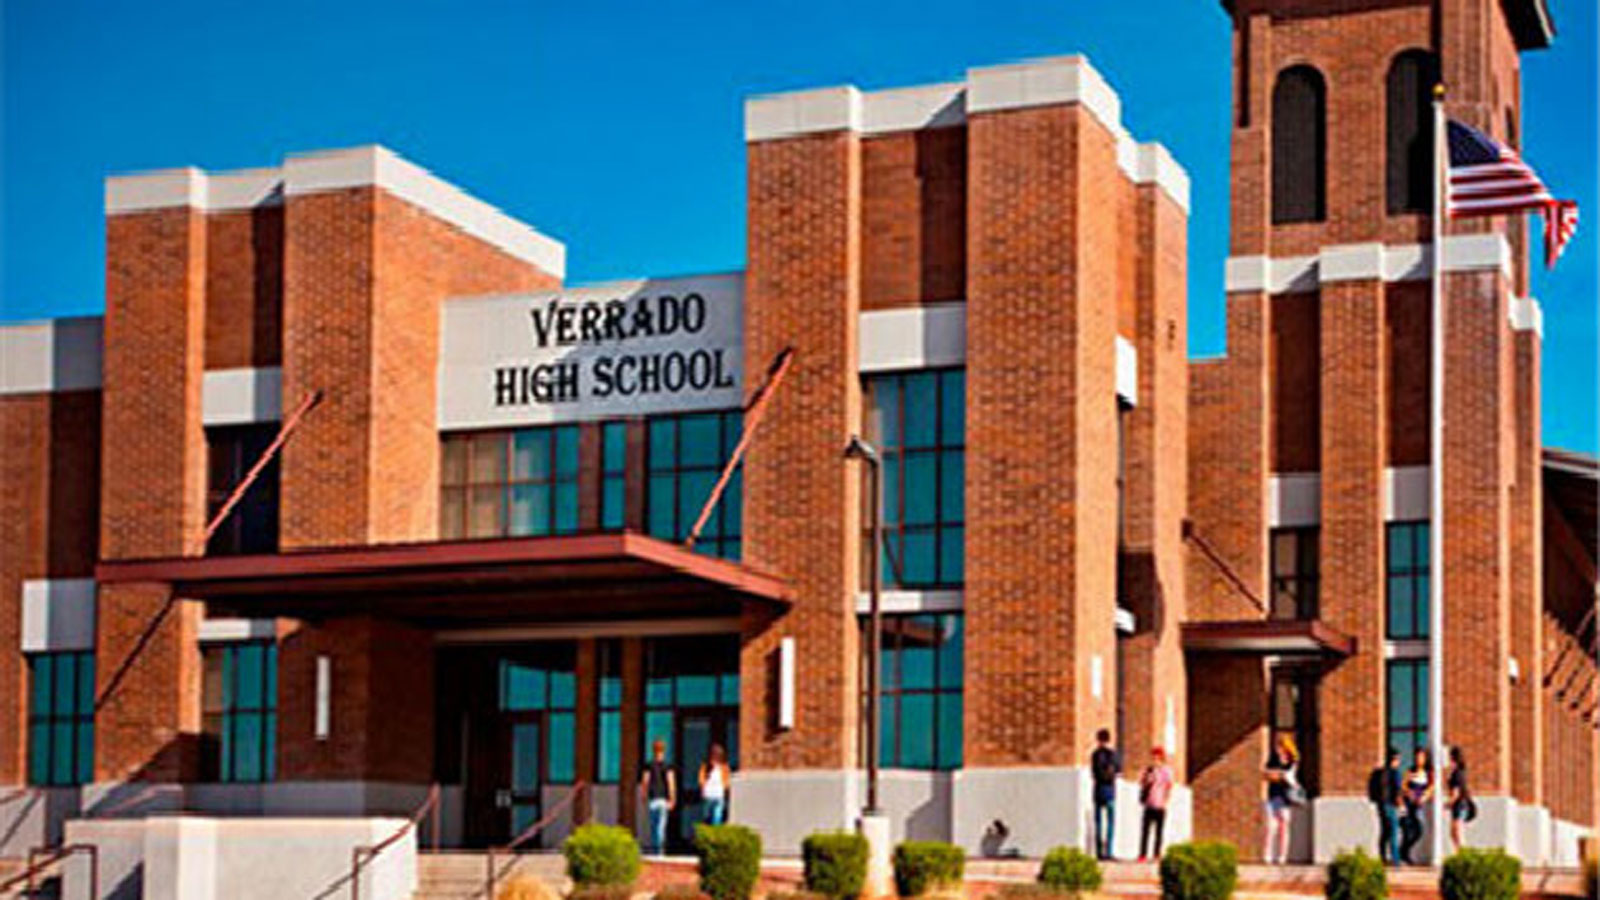 Verrado High School staff disarms student who brought gun to campus